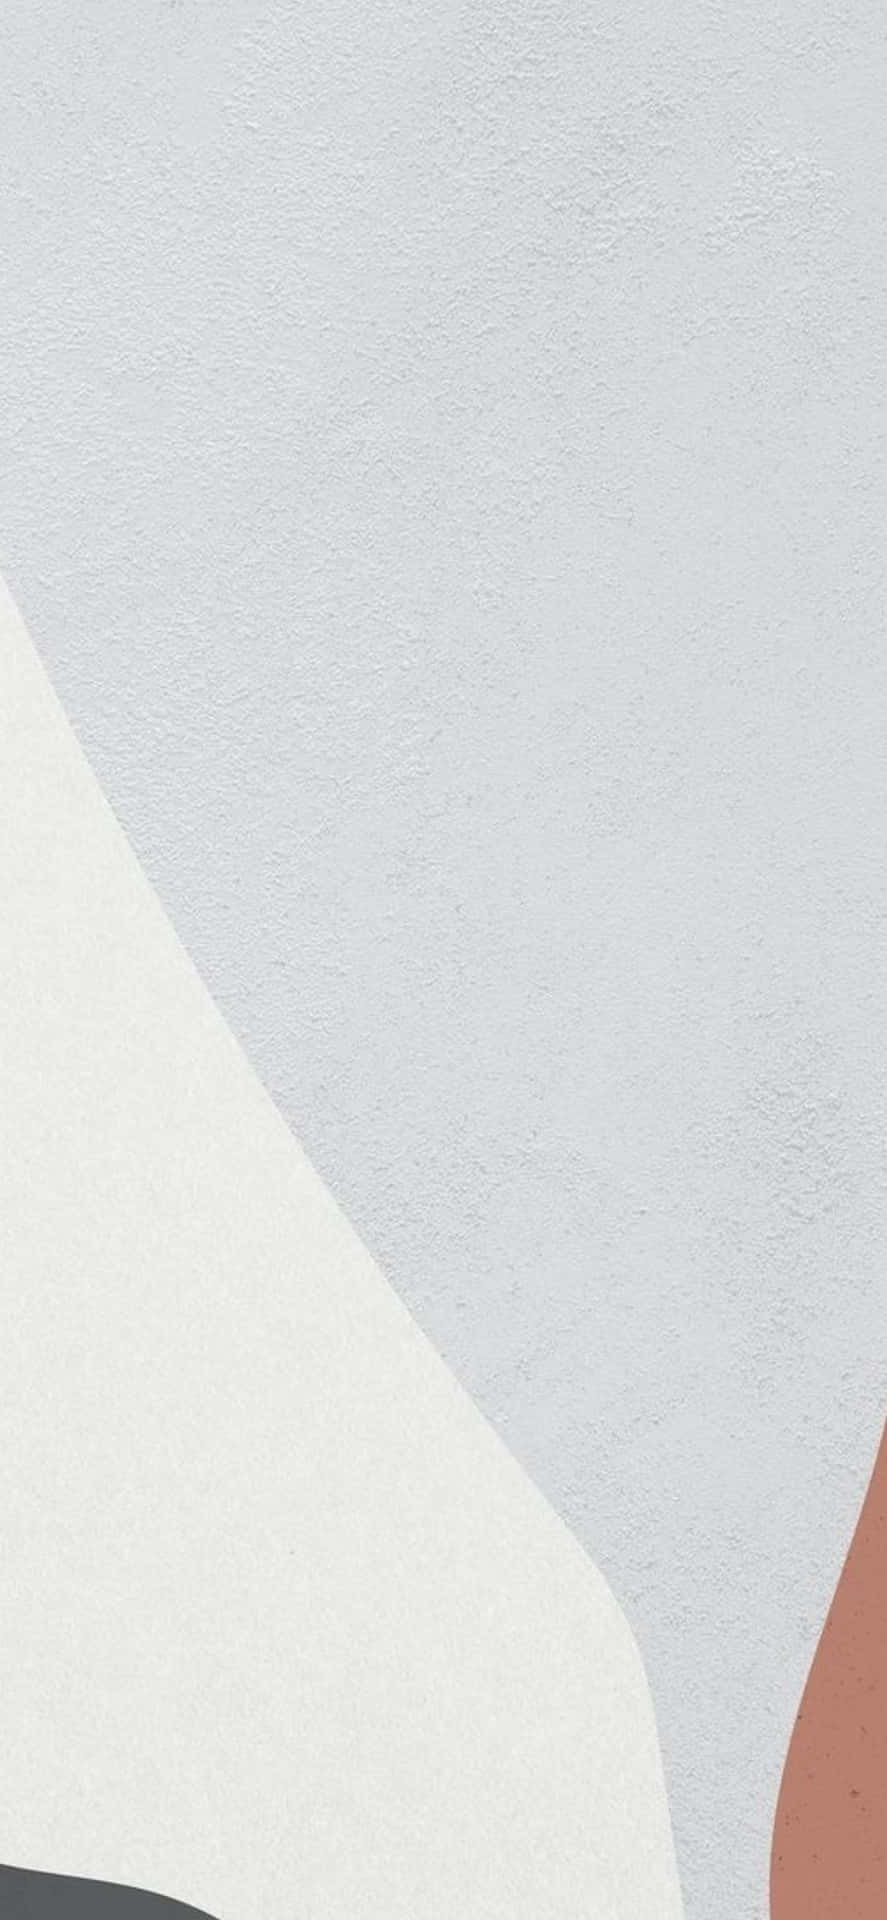 Iphone X Minimal Grey Aesthetic Background